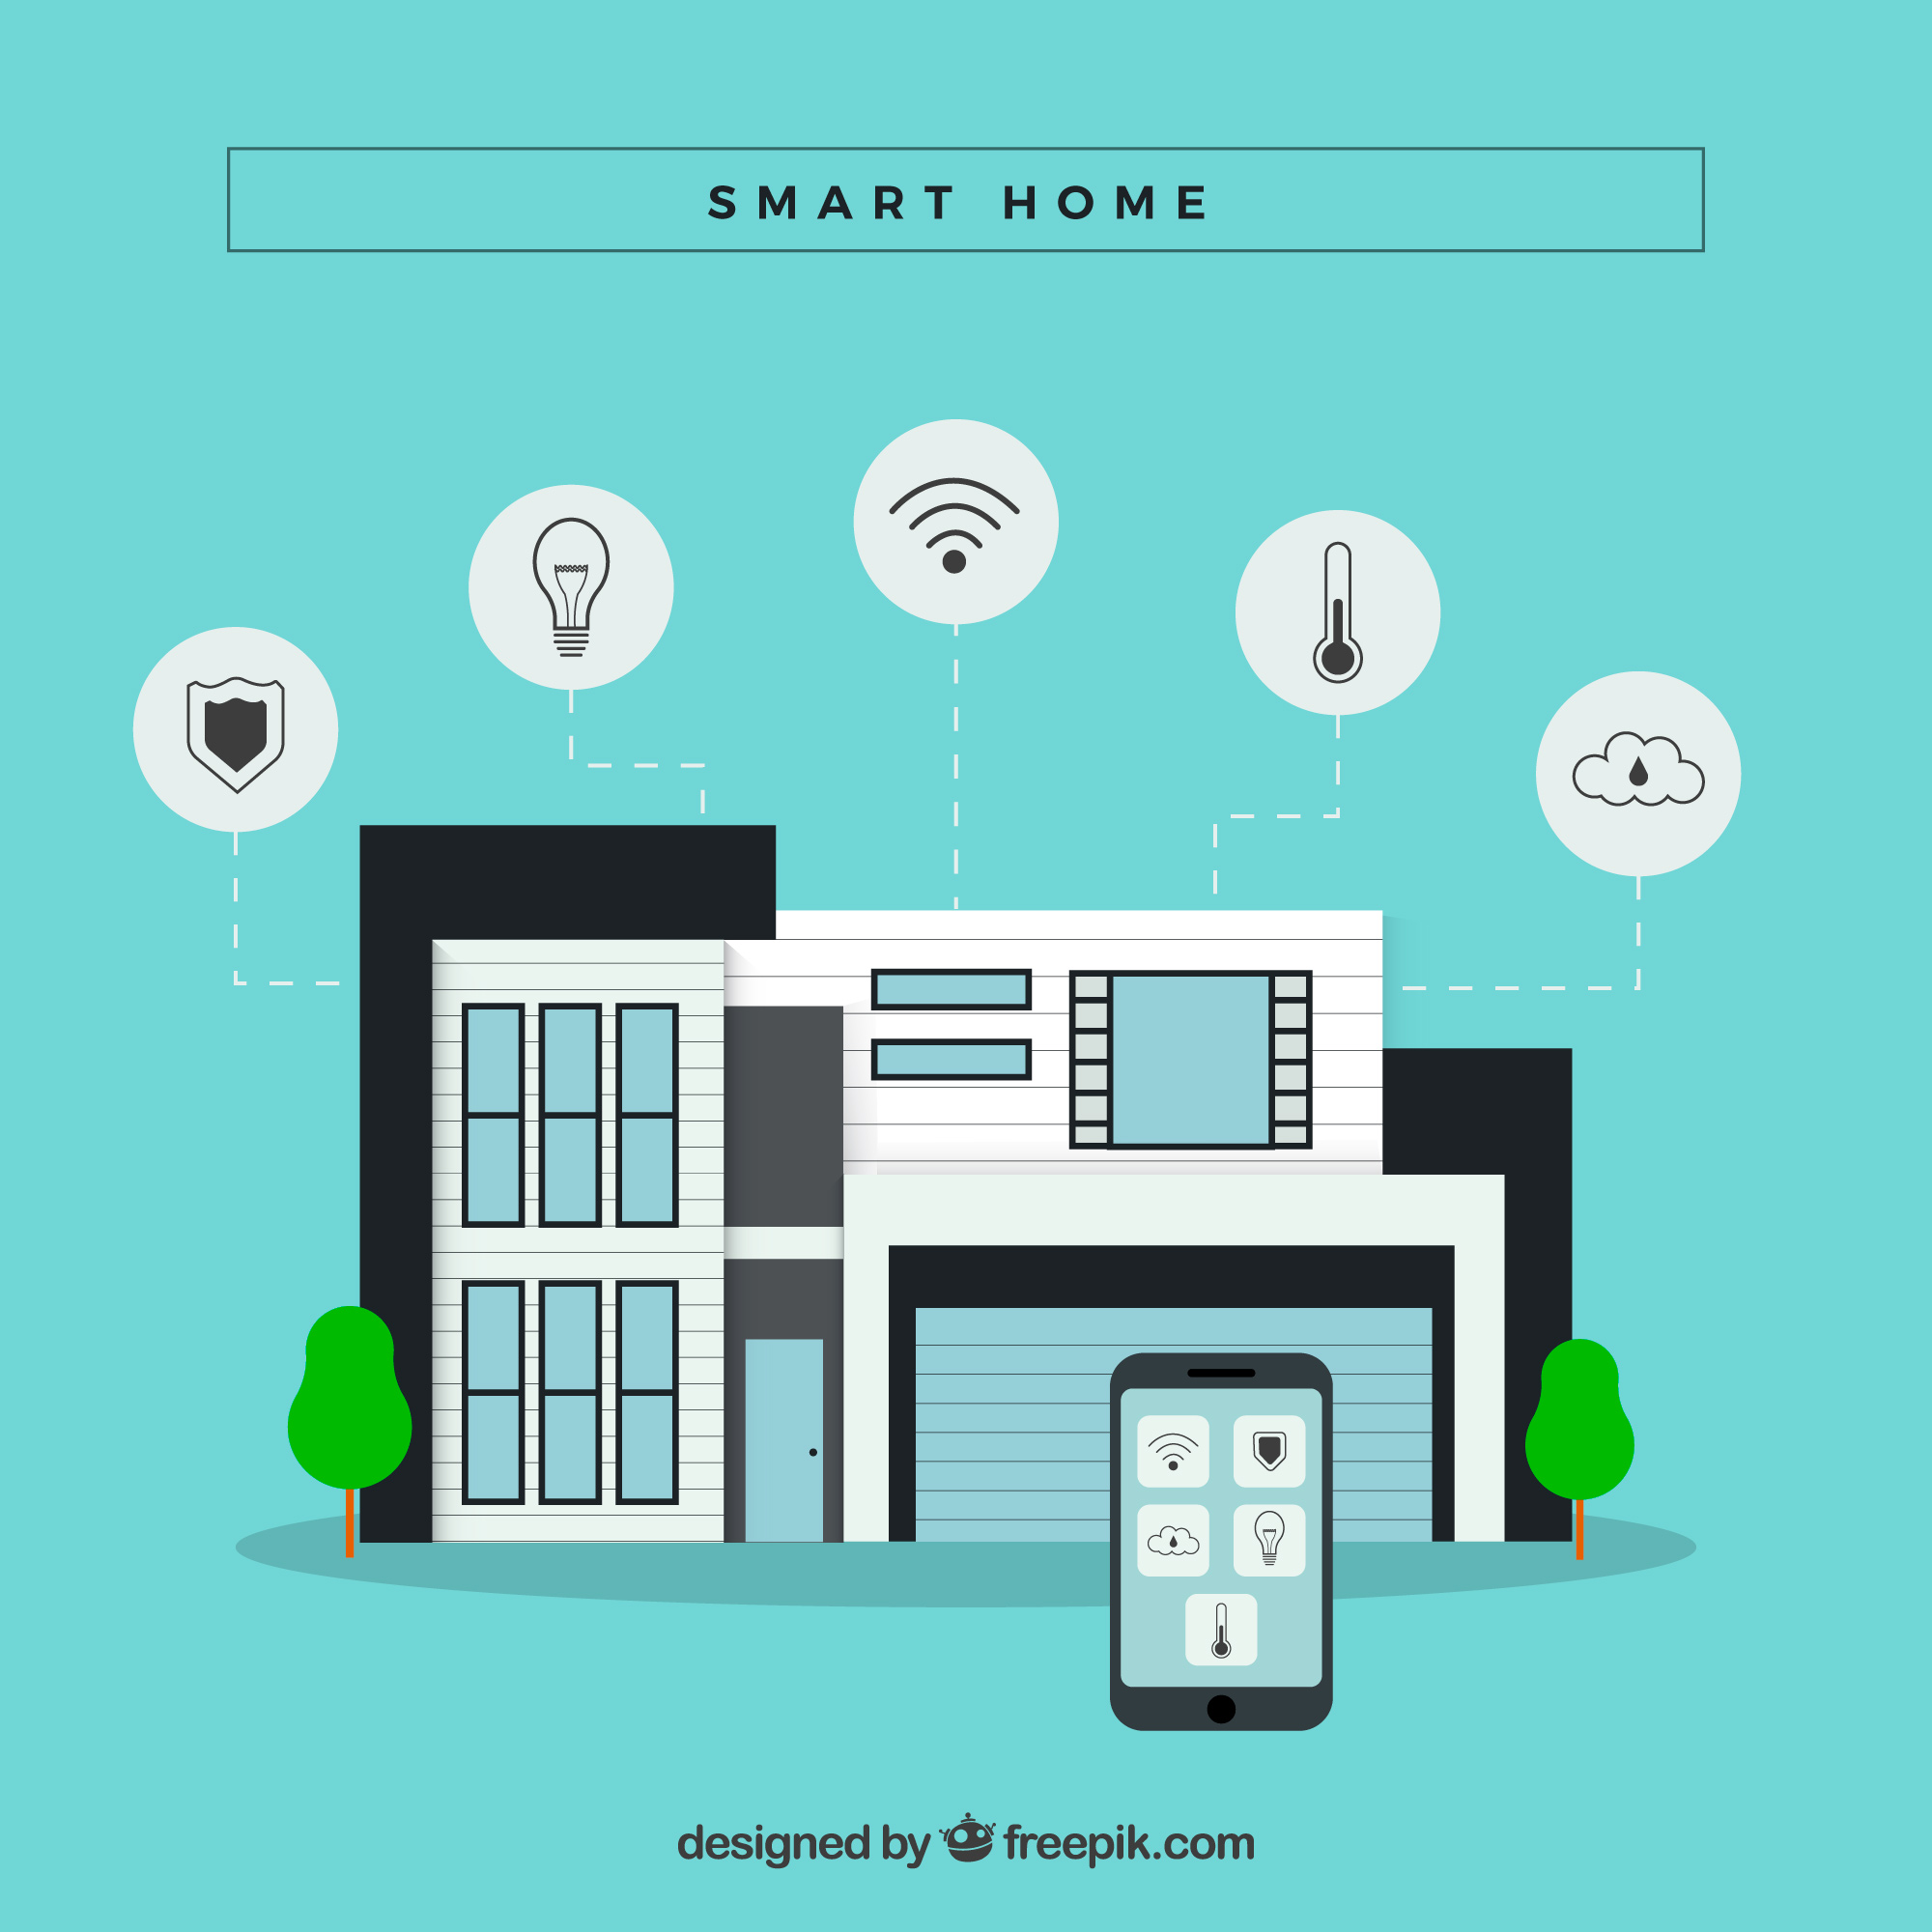 AI and smart homes